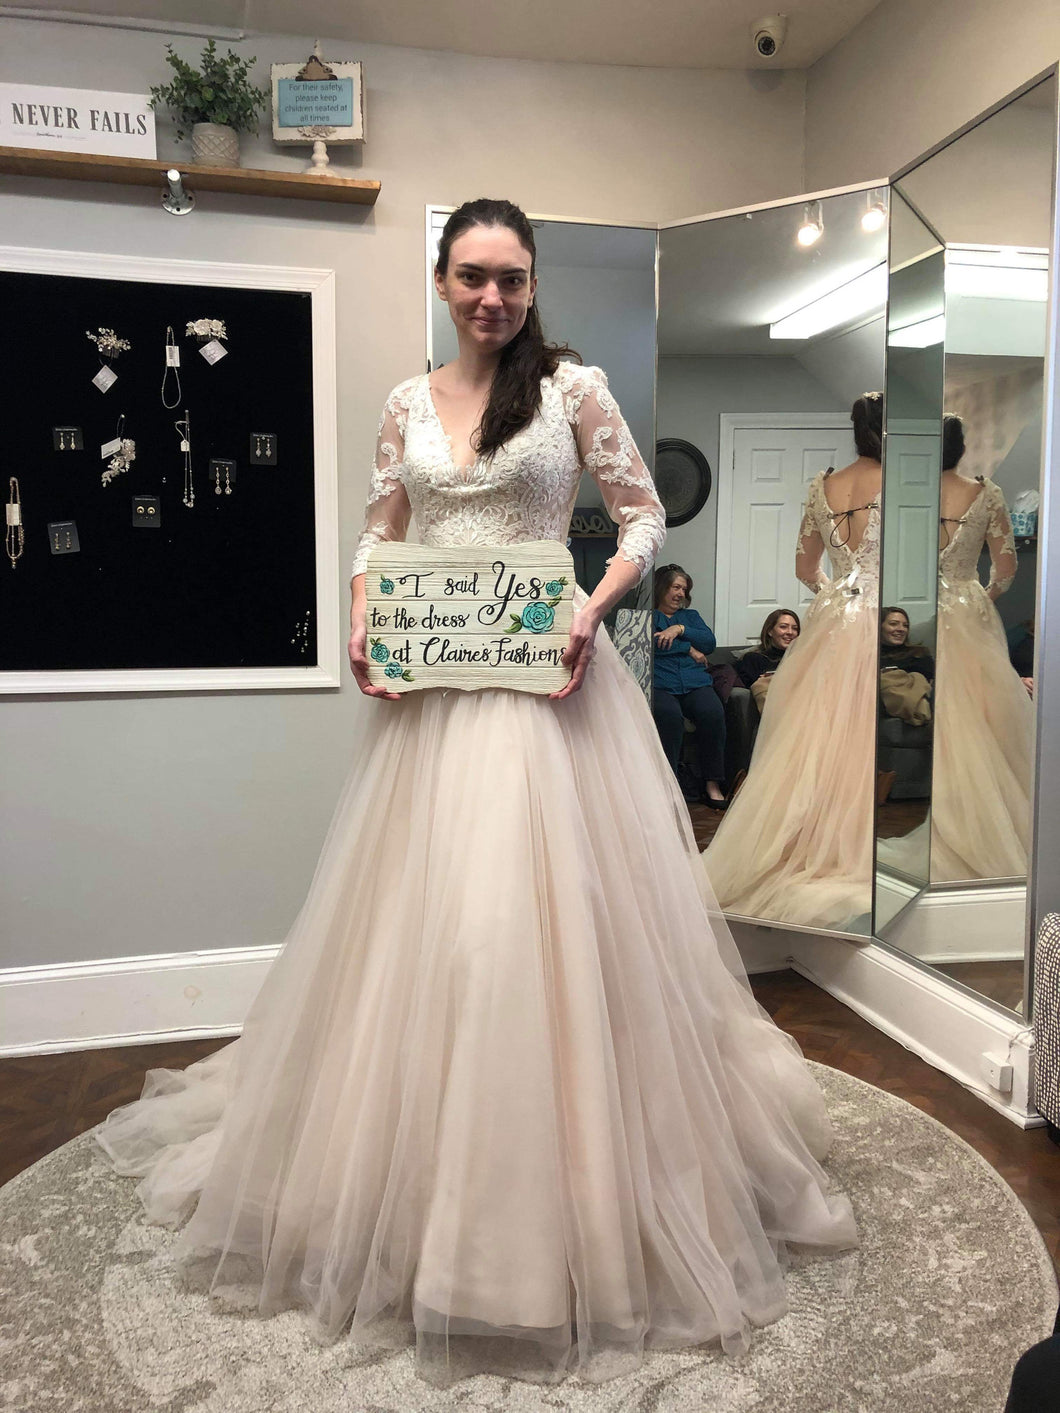 Allure 'Romance 3154' wedding dress size-08 NEW